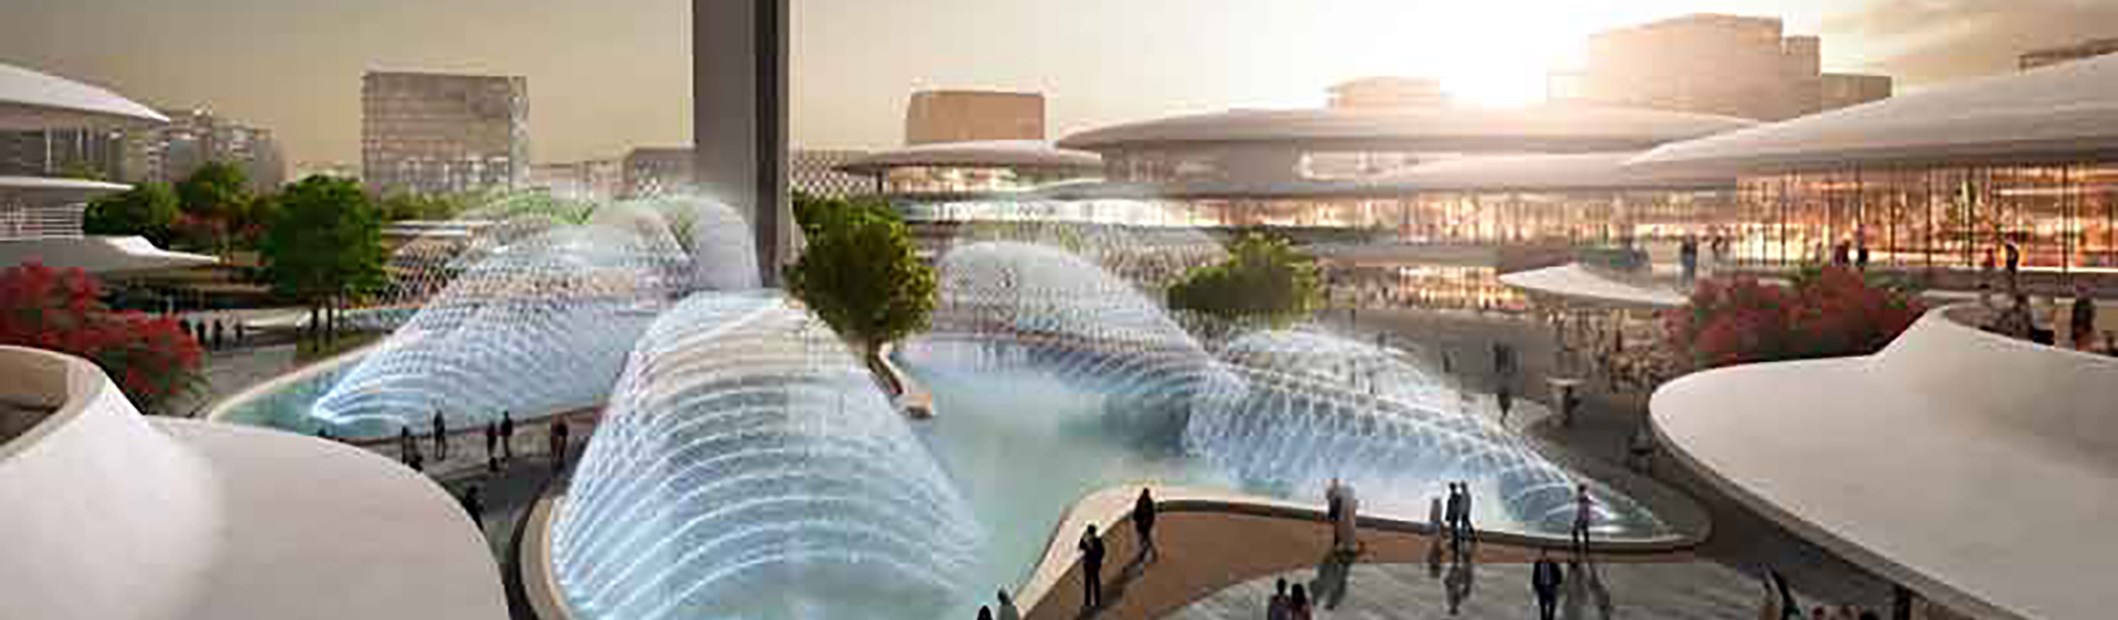 Construction Week: Arada awards contract for Sharjah’s Zaha Hadid-designed Central Hub